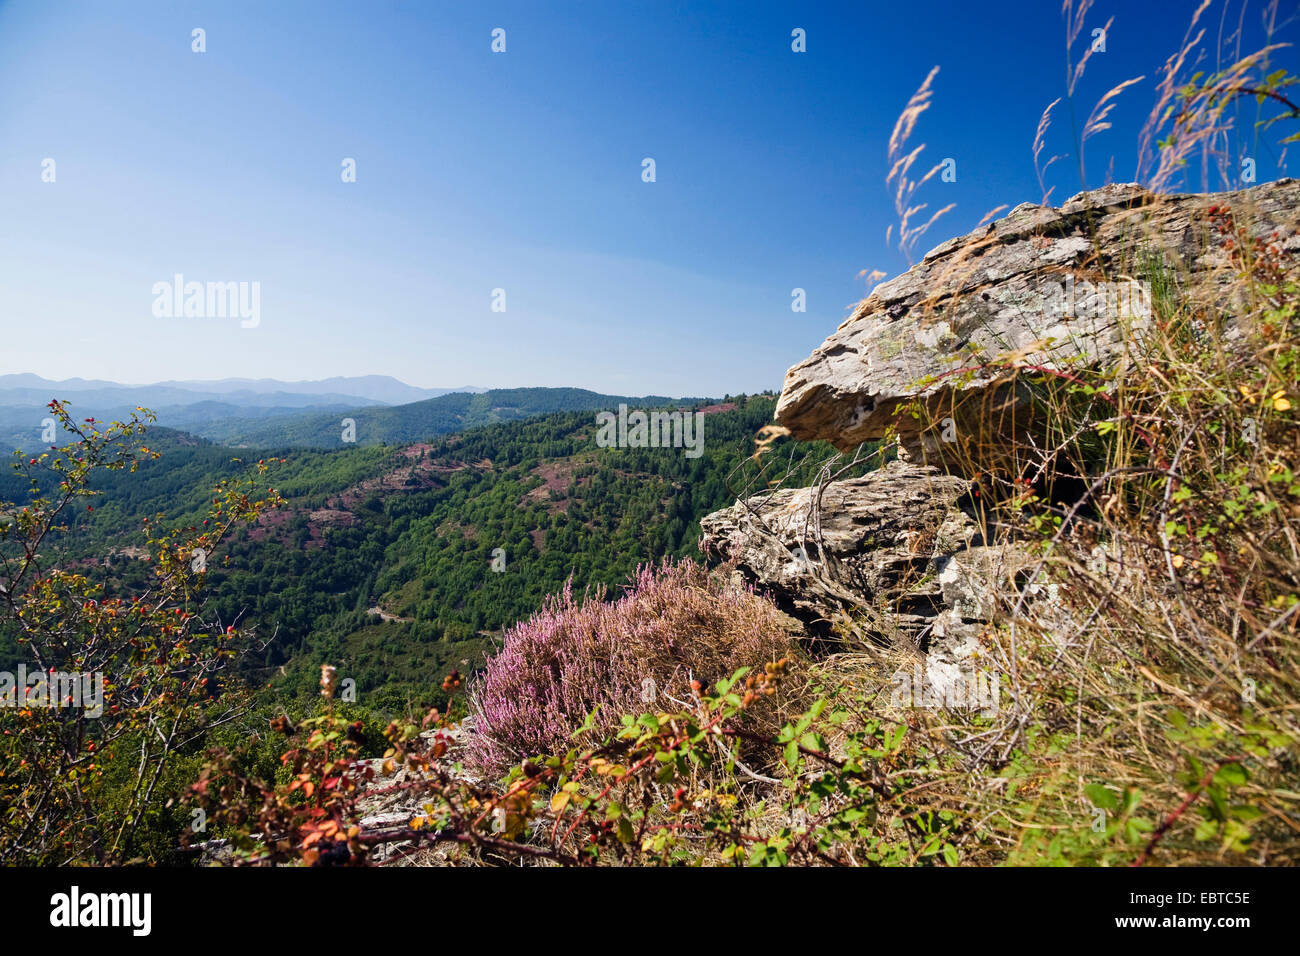 hilly natural landscape, France, Cevennes National Park Stock Photo